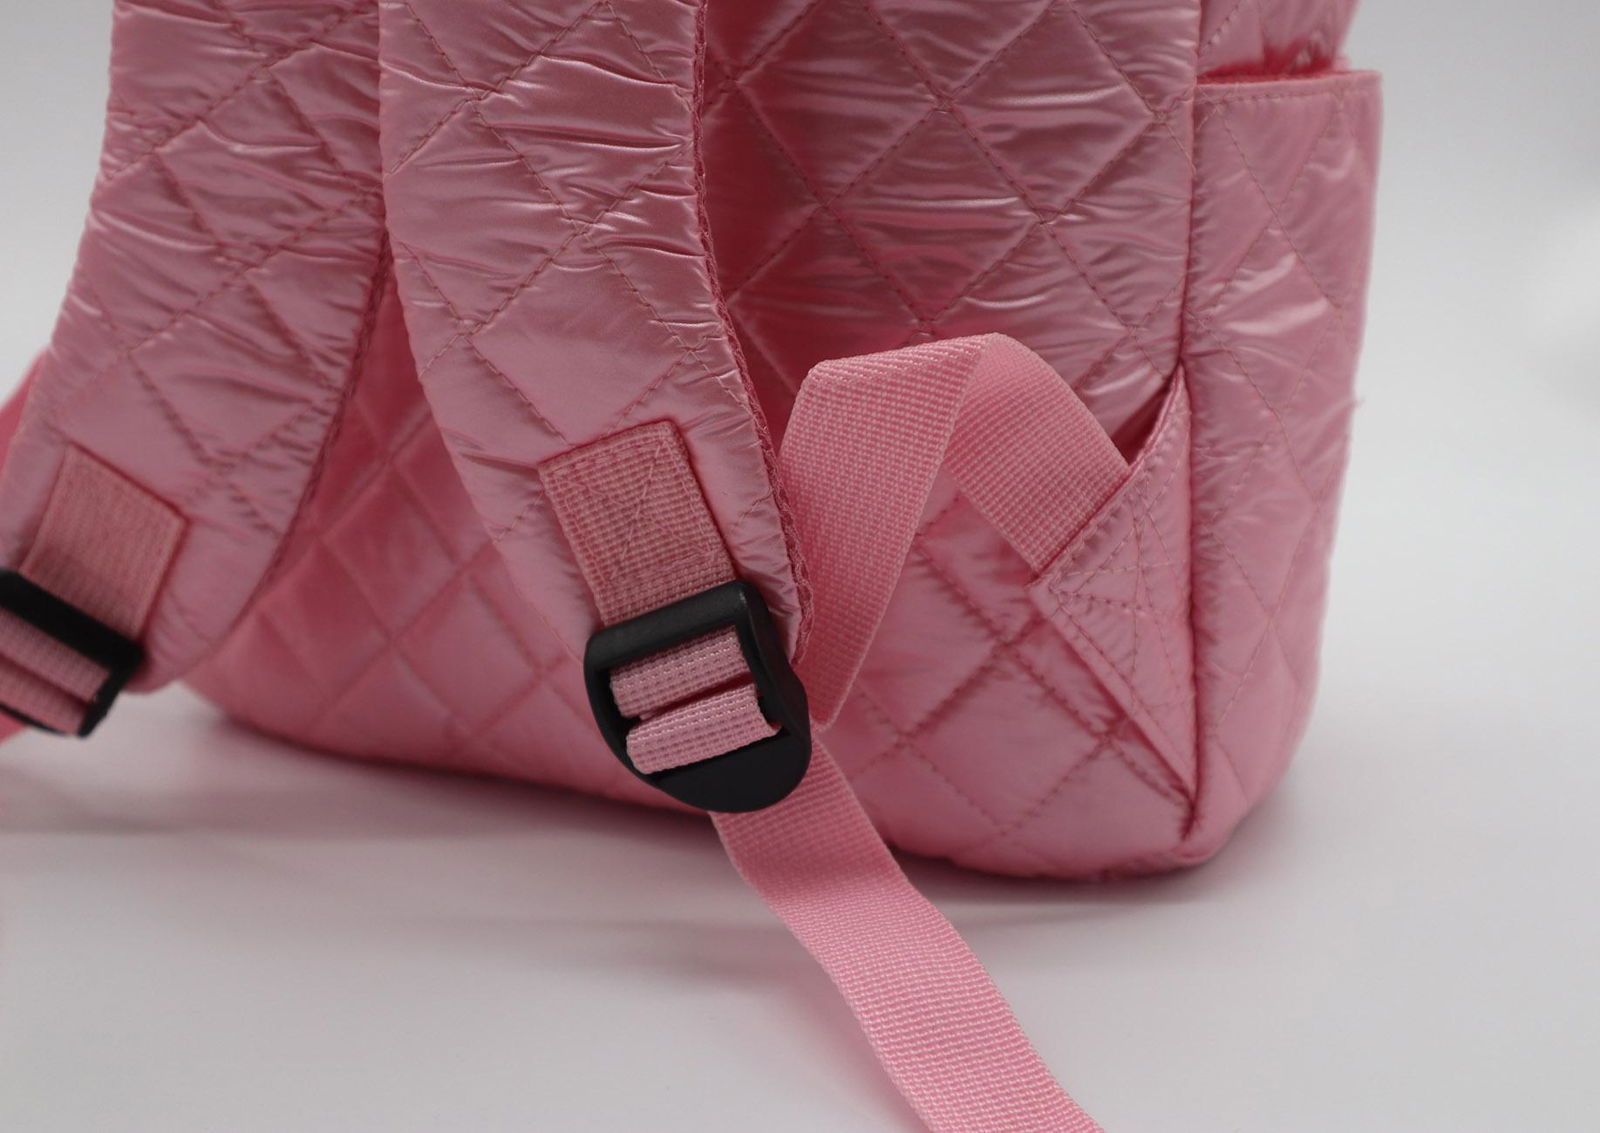 Nylon quilted lovely kids small pink school bag for kindergarten girls 5